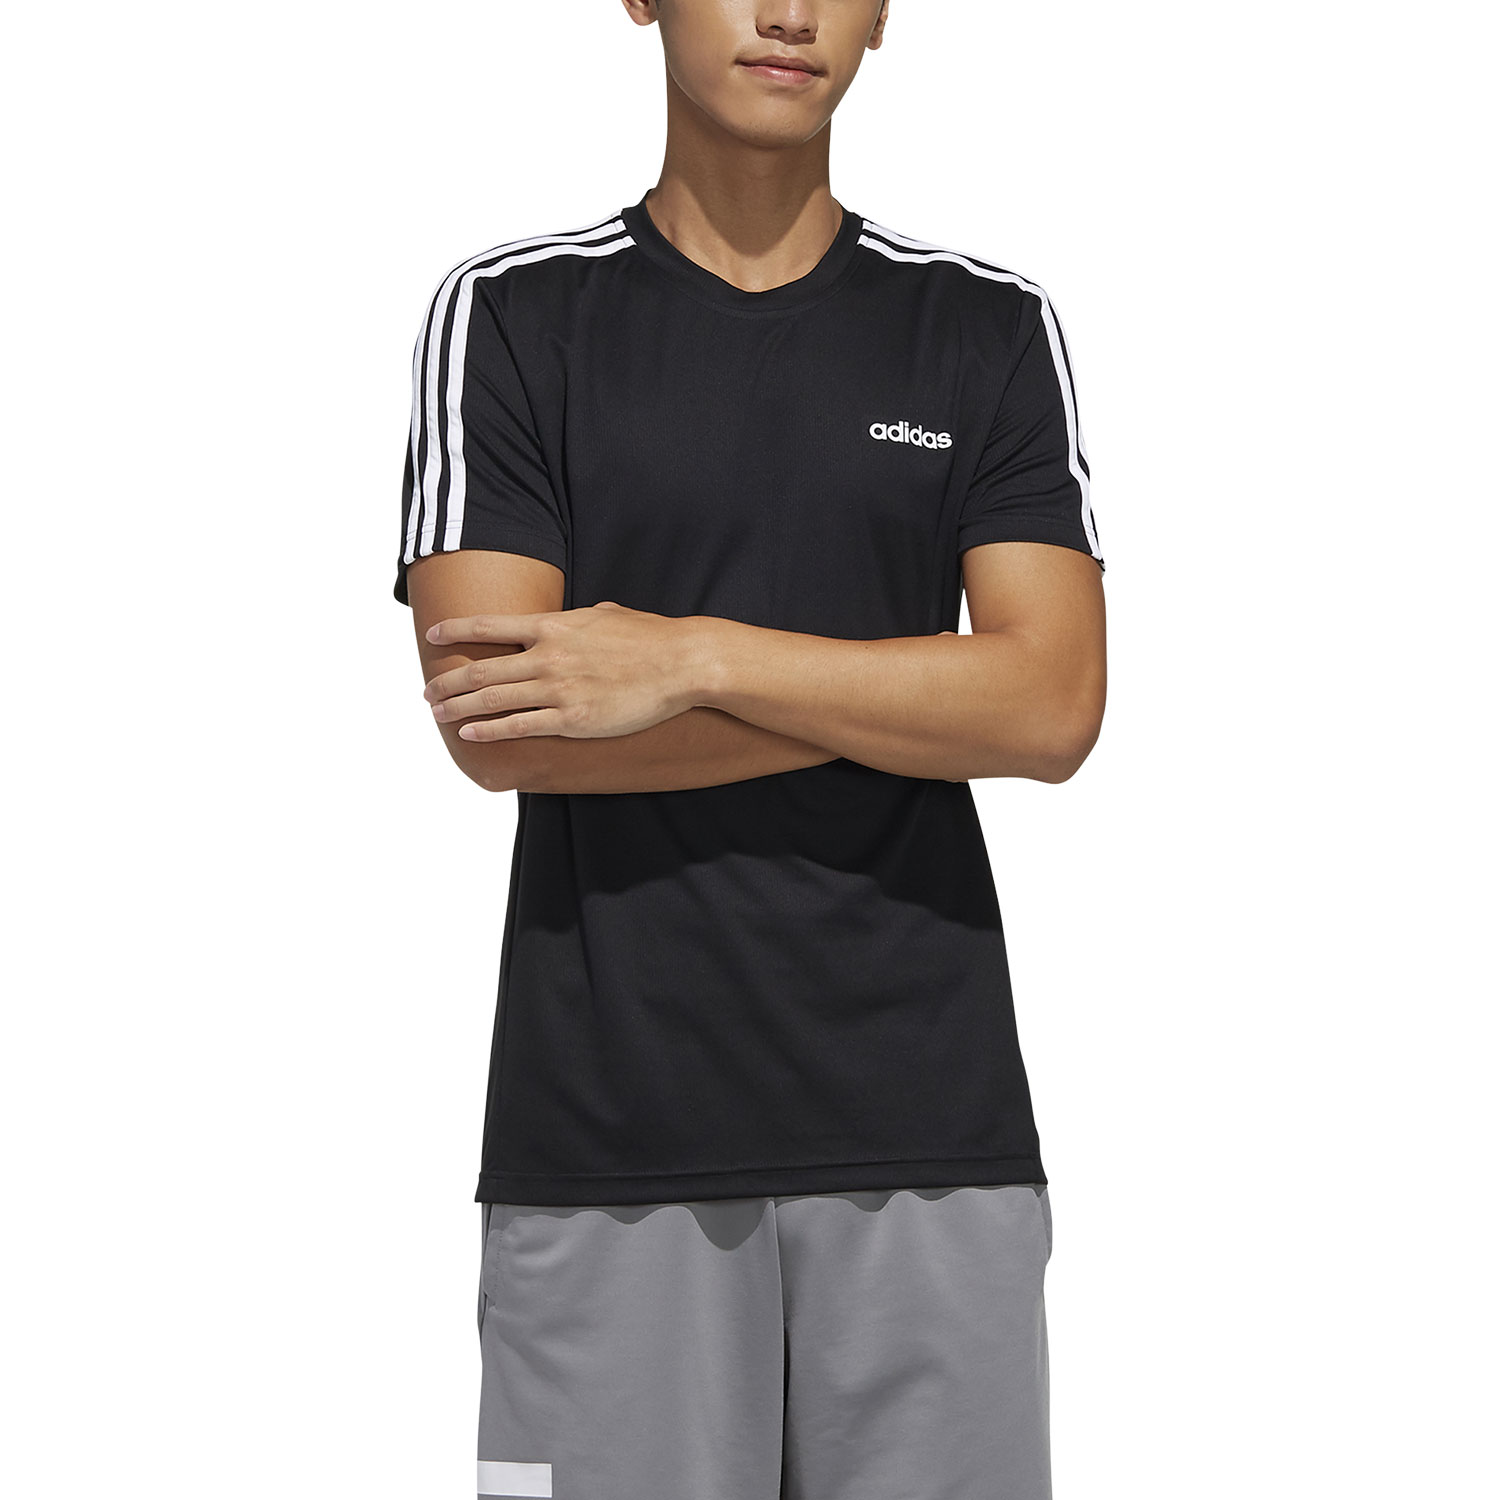 adidas D2M 3 Stripes Men's Running T-Shirt - Black/White